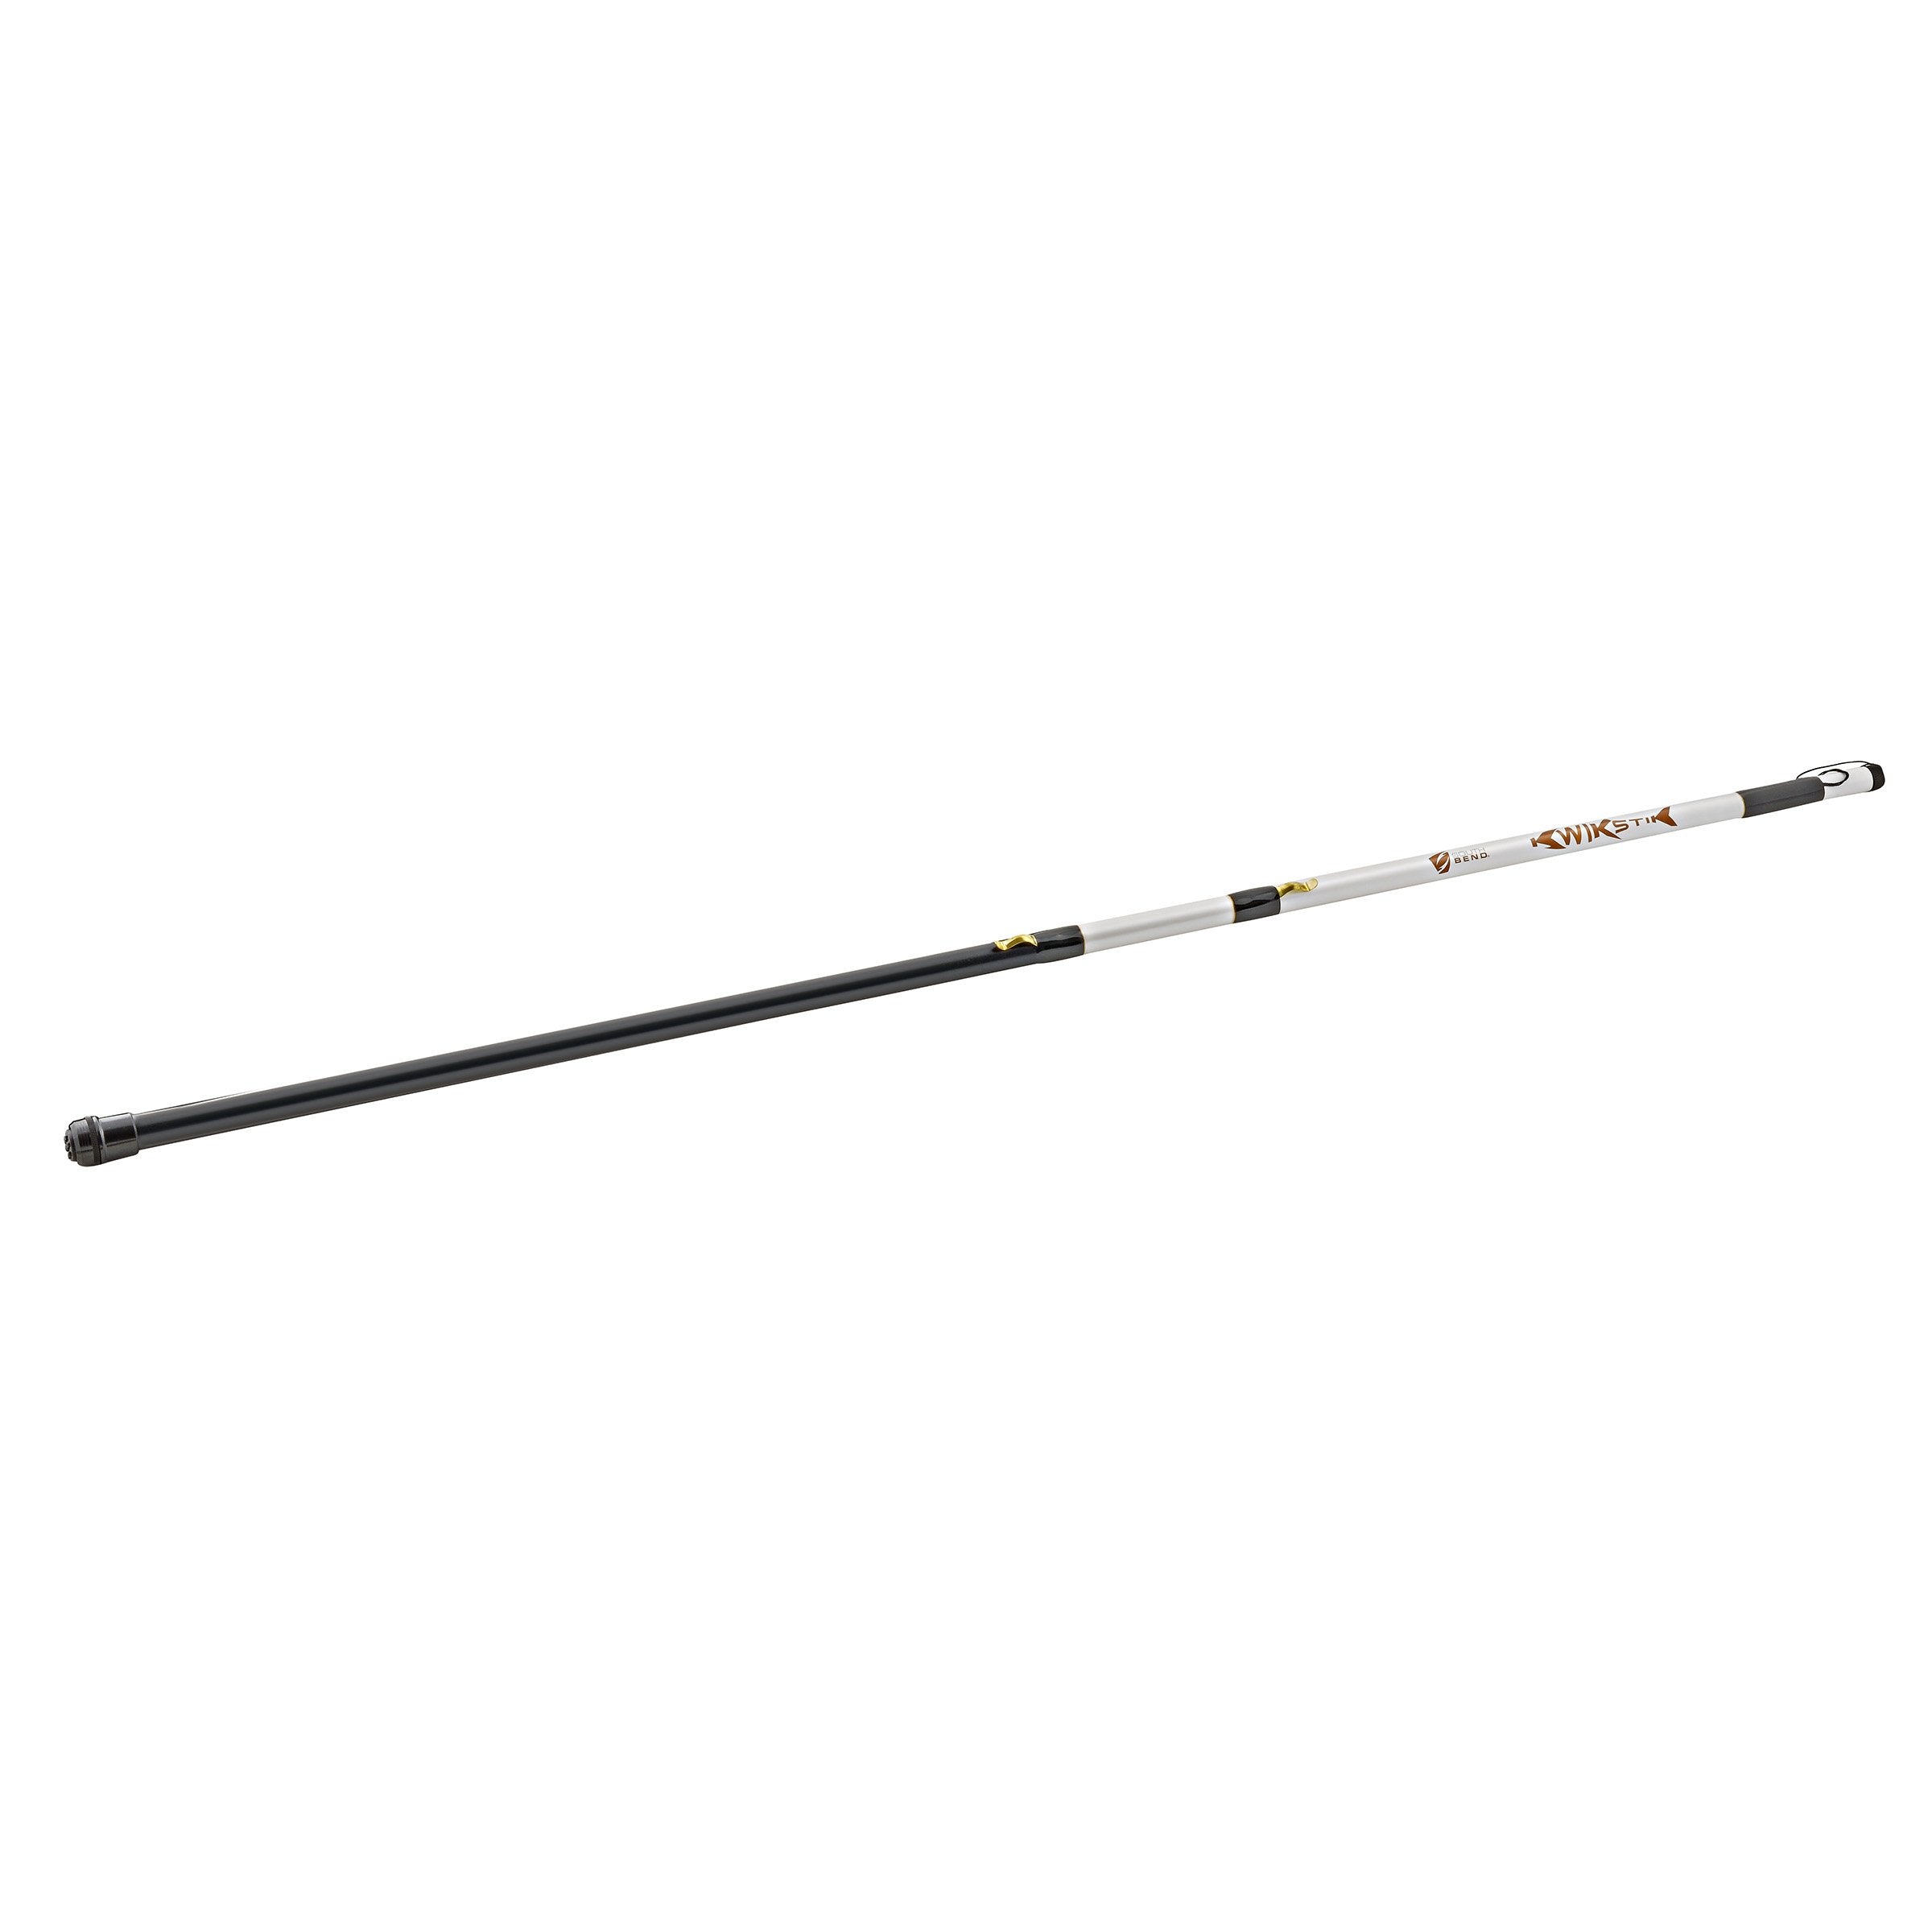 Crappie Stalker Bream Poles, Telescopic Fishing Rod 